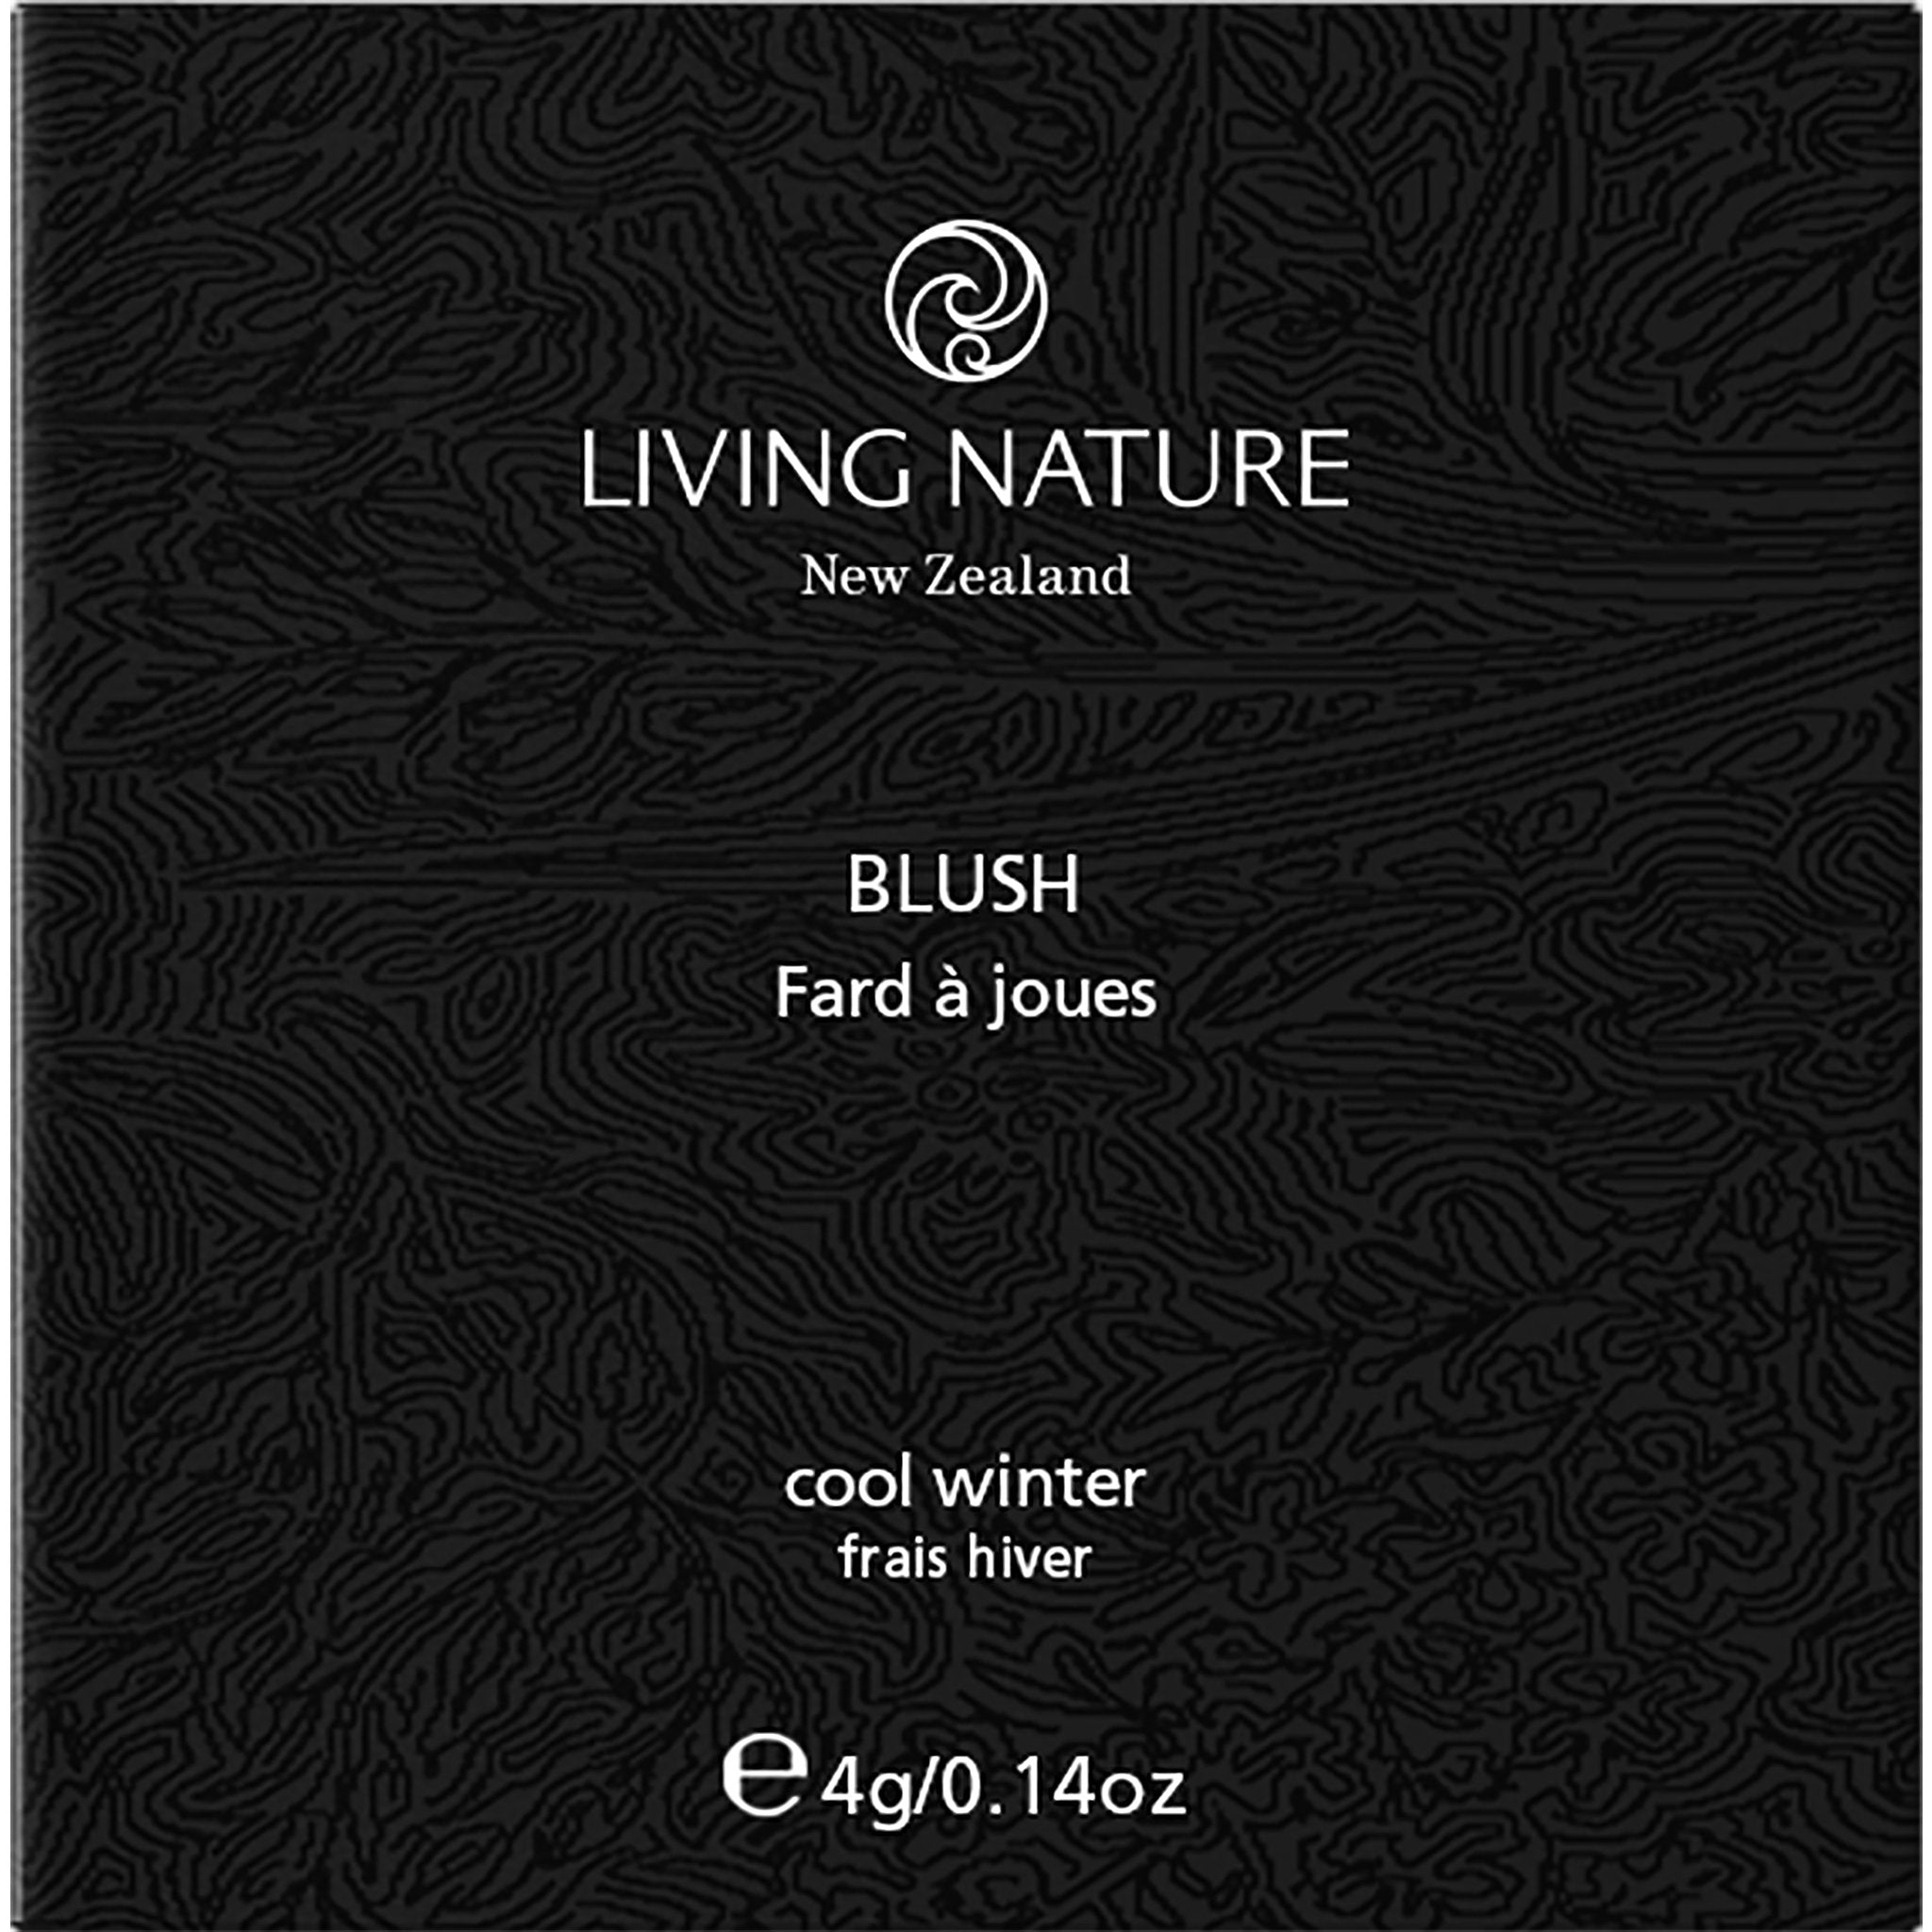 Natural Blush - mypure.co.uk